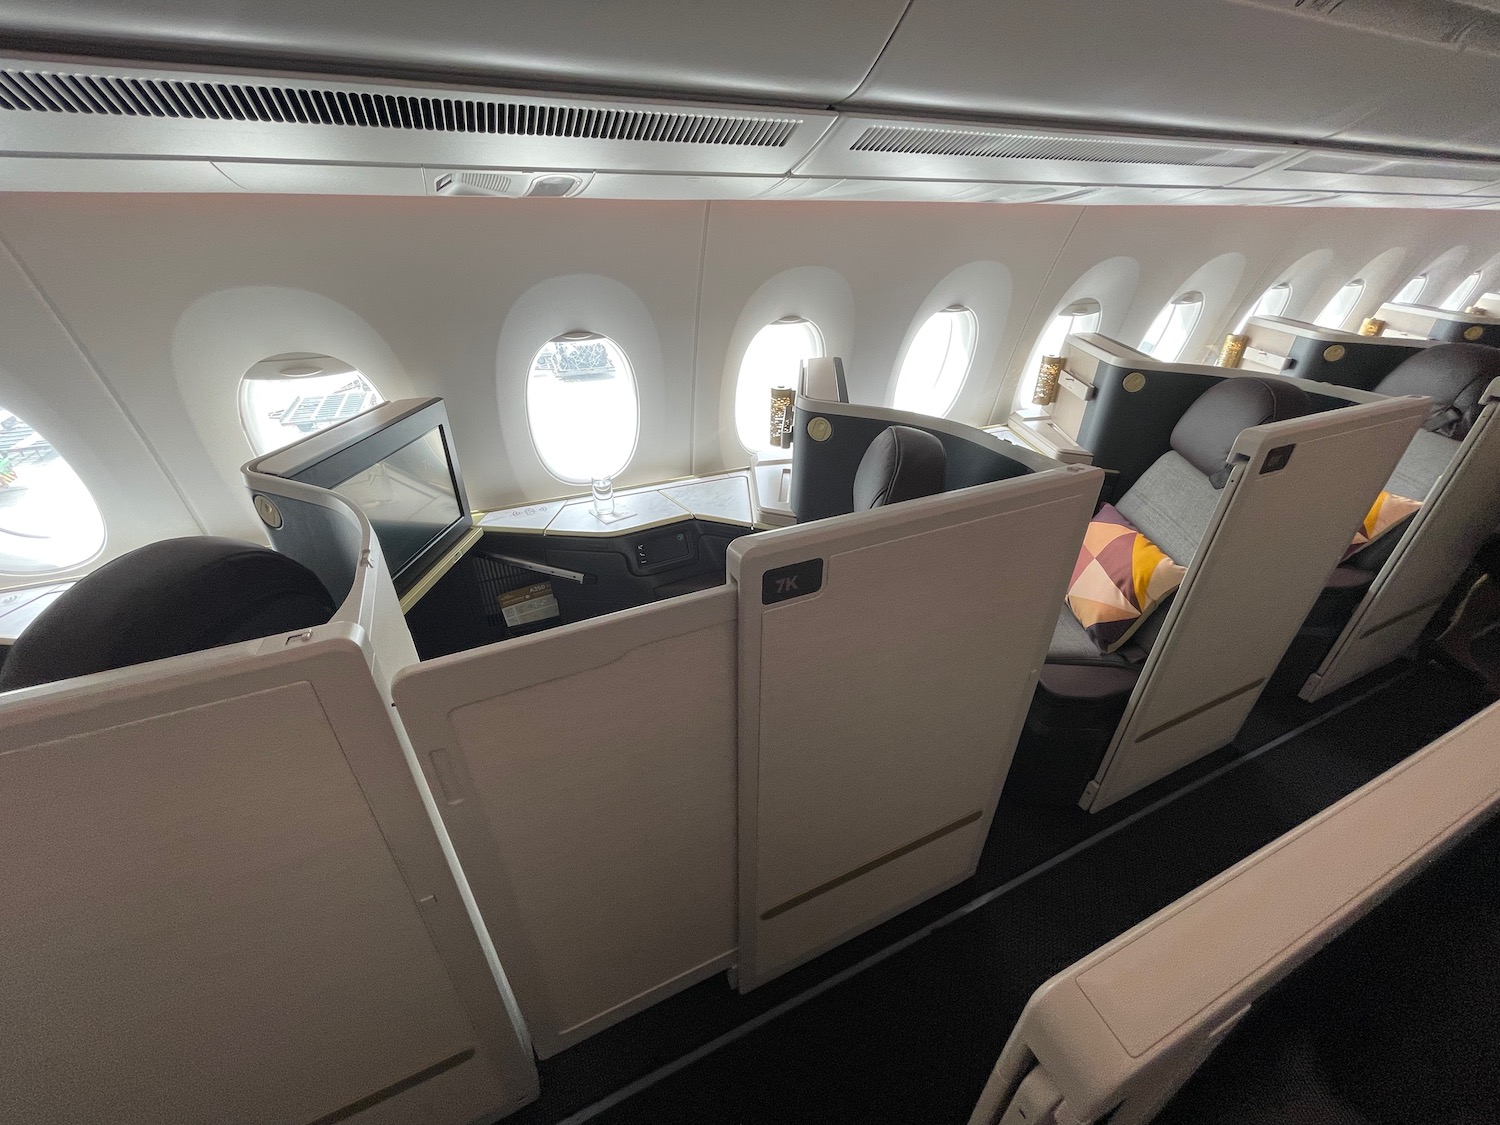 a row of seats on a plane